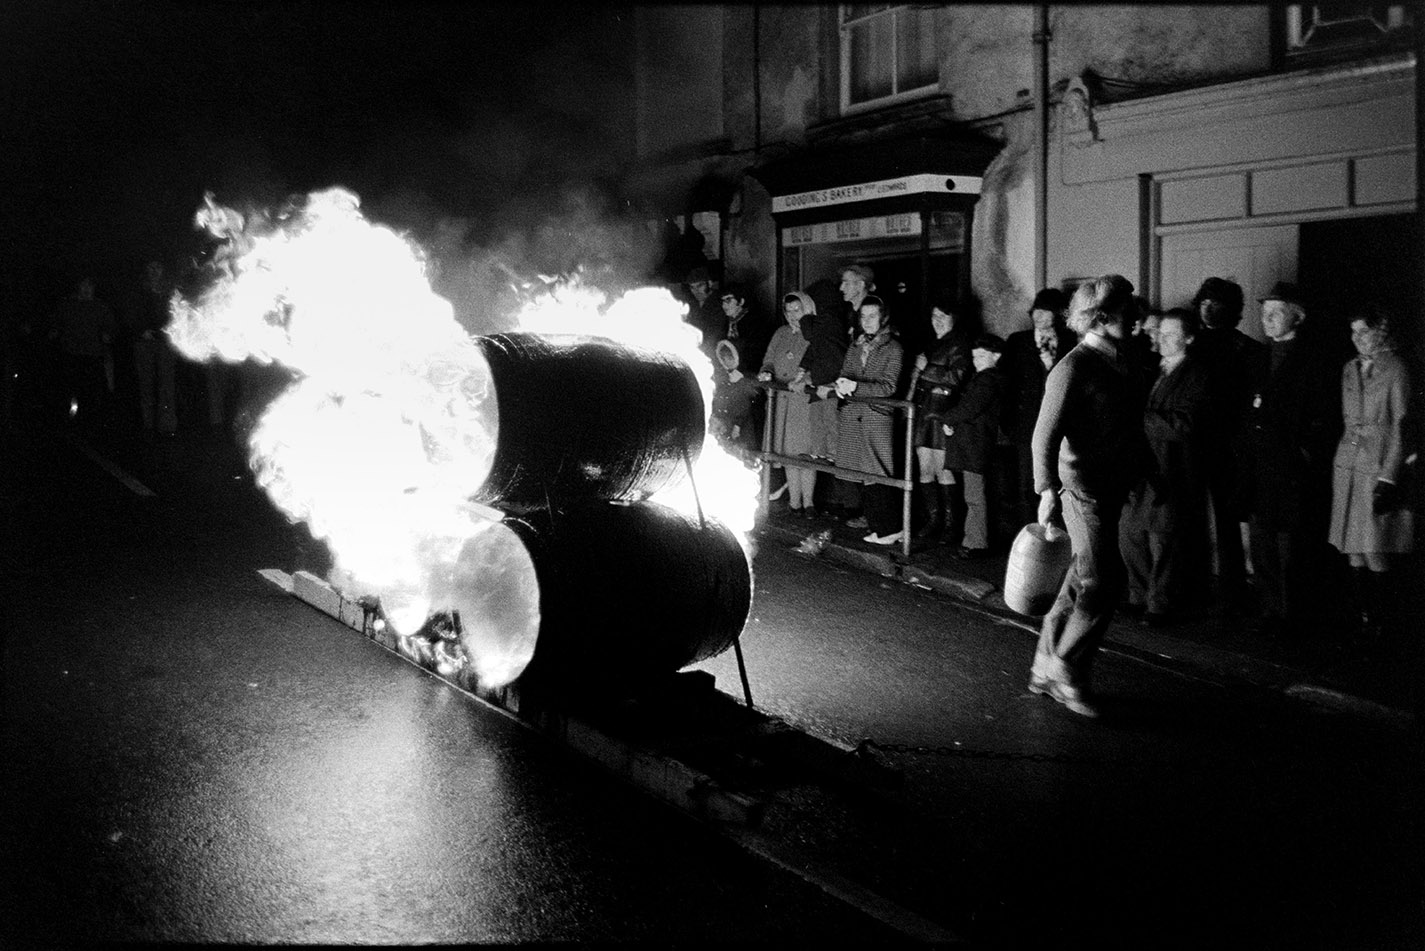 Burning tar barrels being pulled through the street at night, Hatherleigh, 6 November 1974